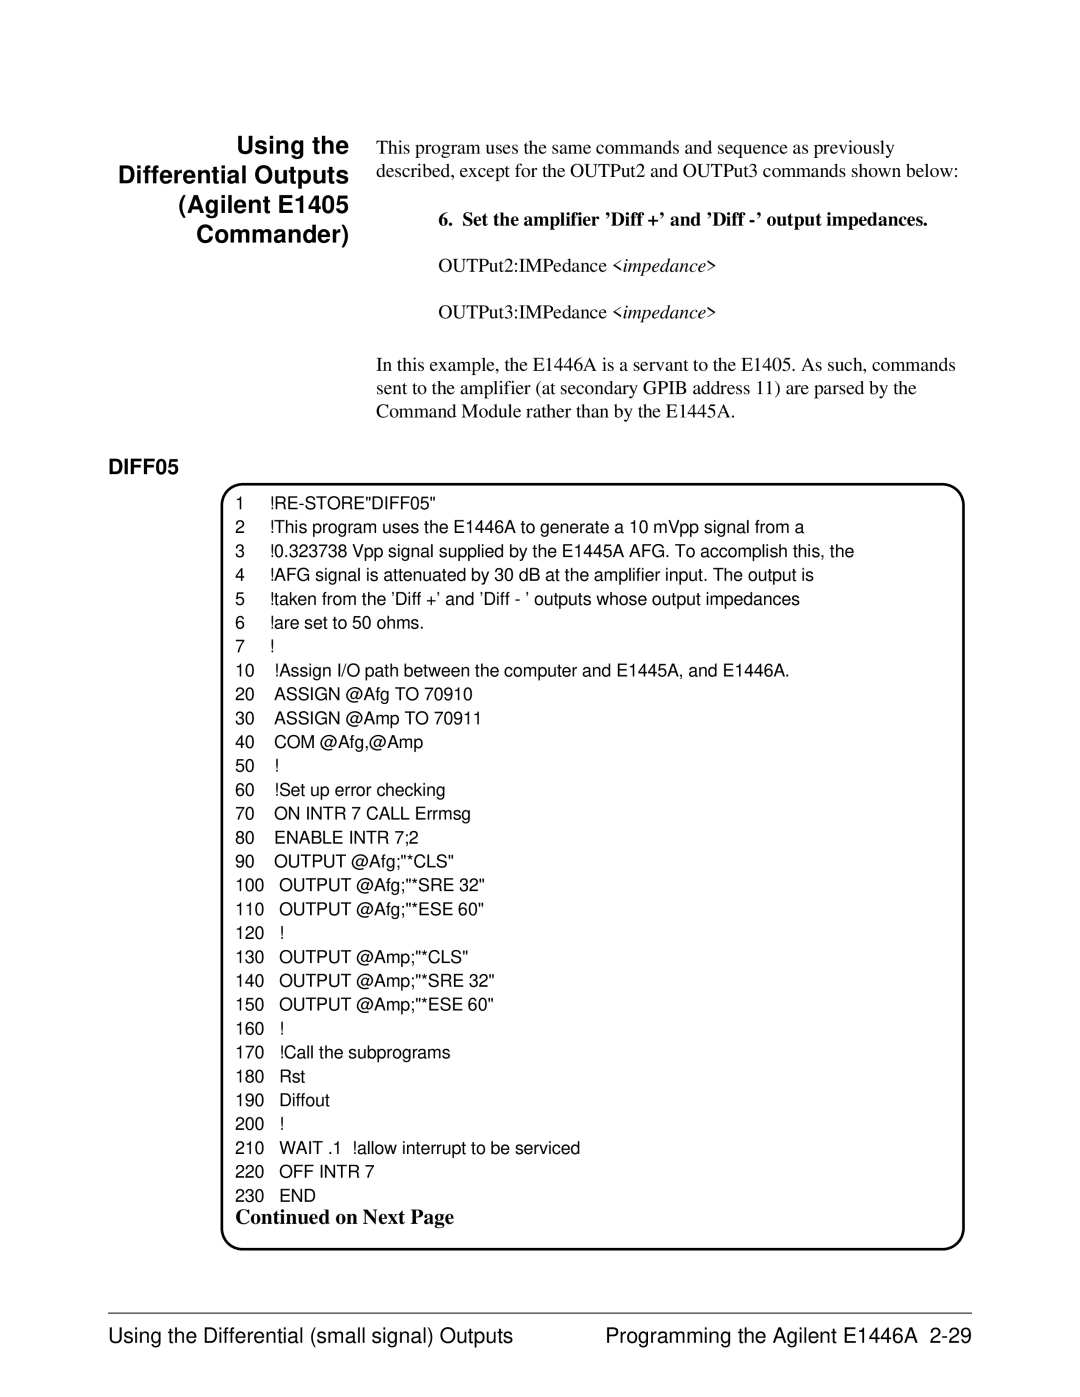 Agilent Technologies E1446A user manual Using Differential Outputs Agilent E1405 Commander, RE-STOREDIFF05 